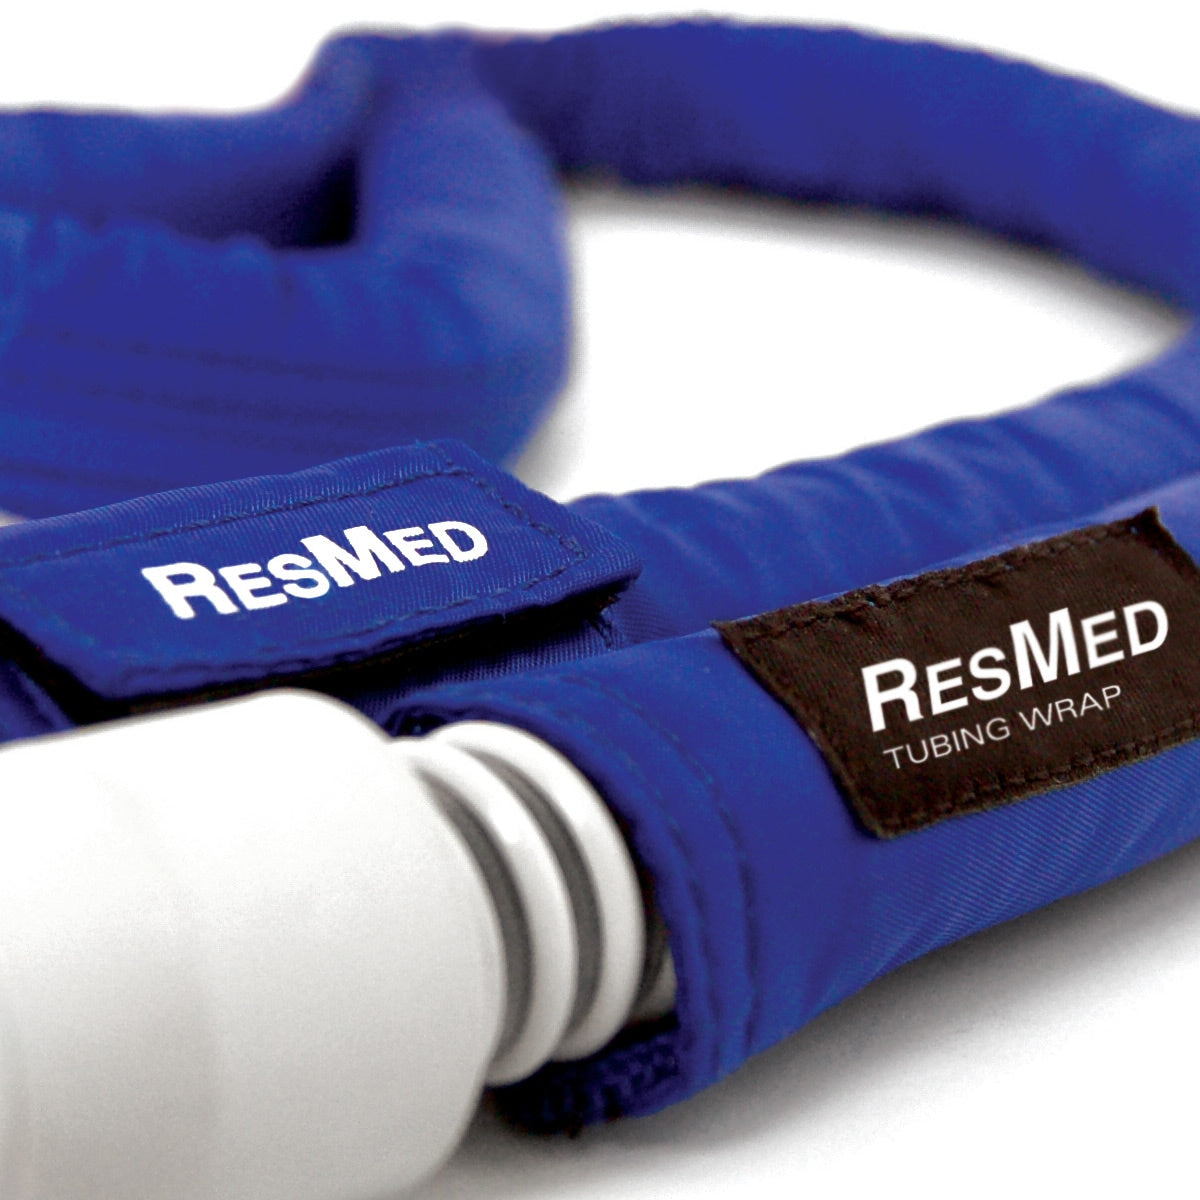 ResMed Tubing Wrap Royal Blue Soft CPAP/BiLevel Hose Tube Cover (2-Meter)